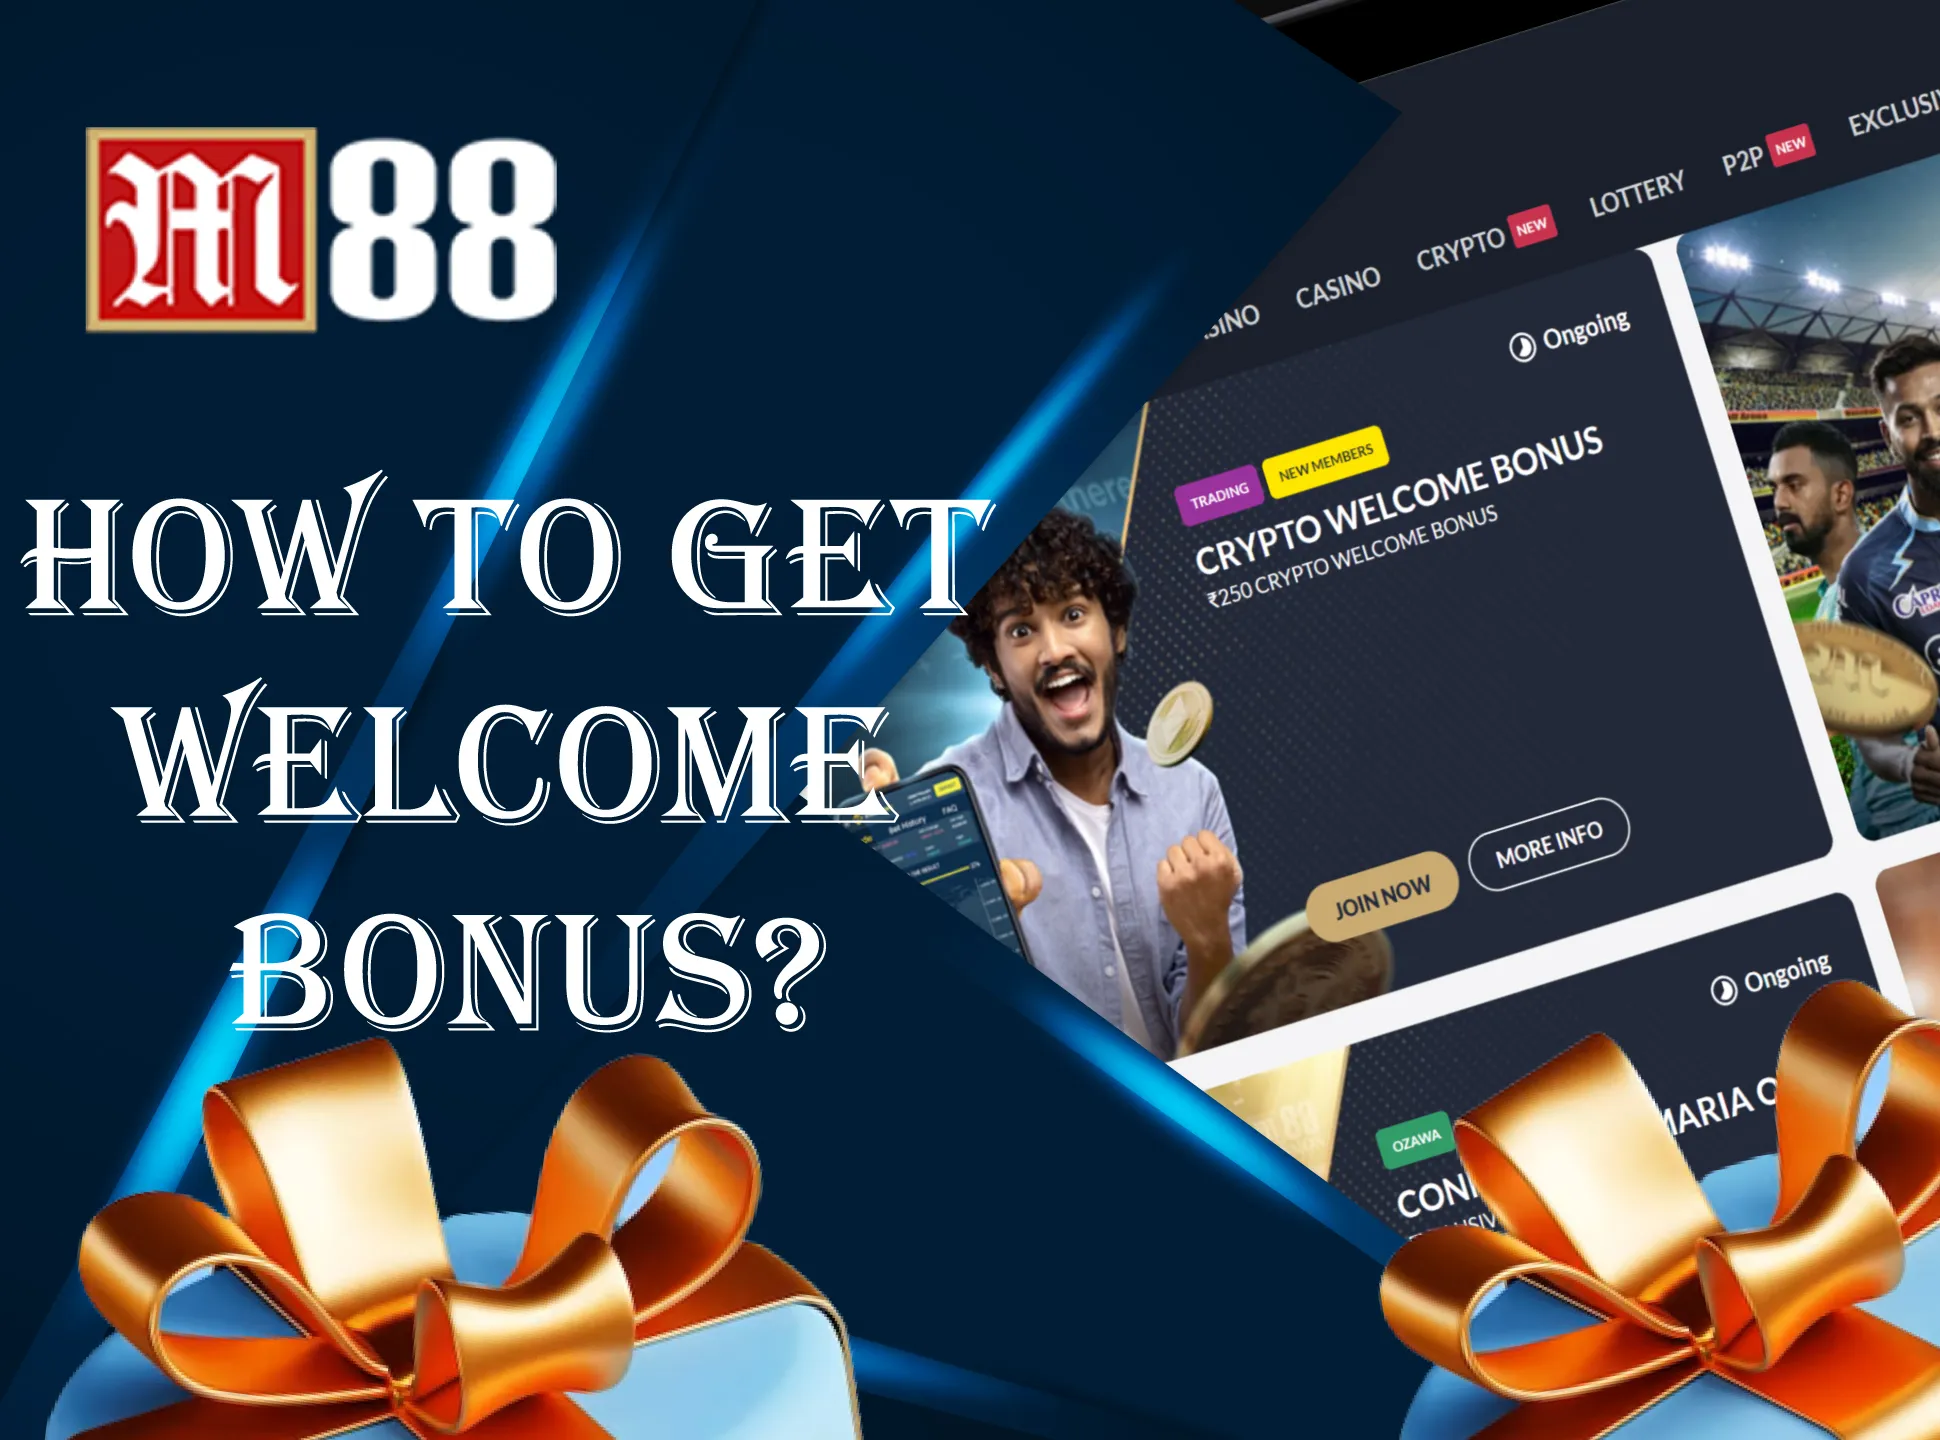 Get your first M88 welcome bonus after registration.